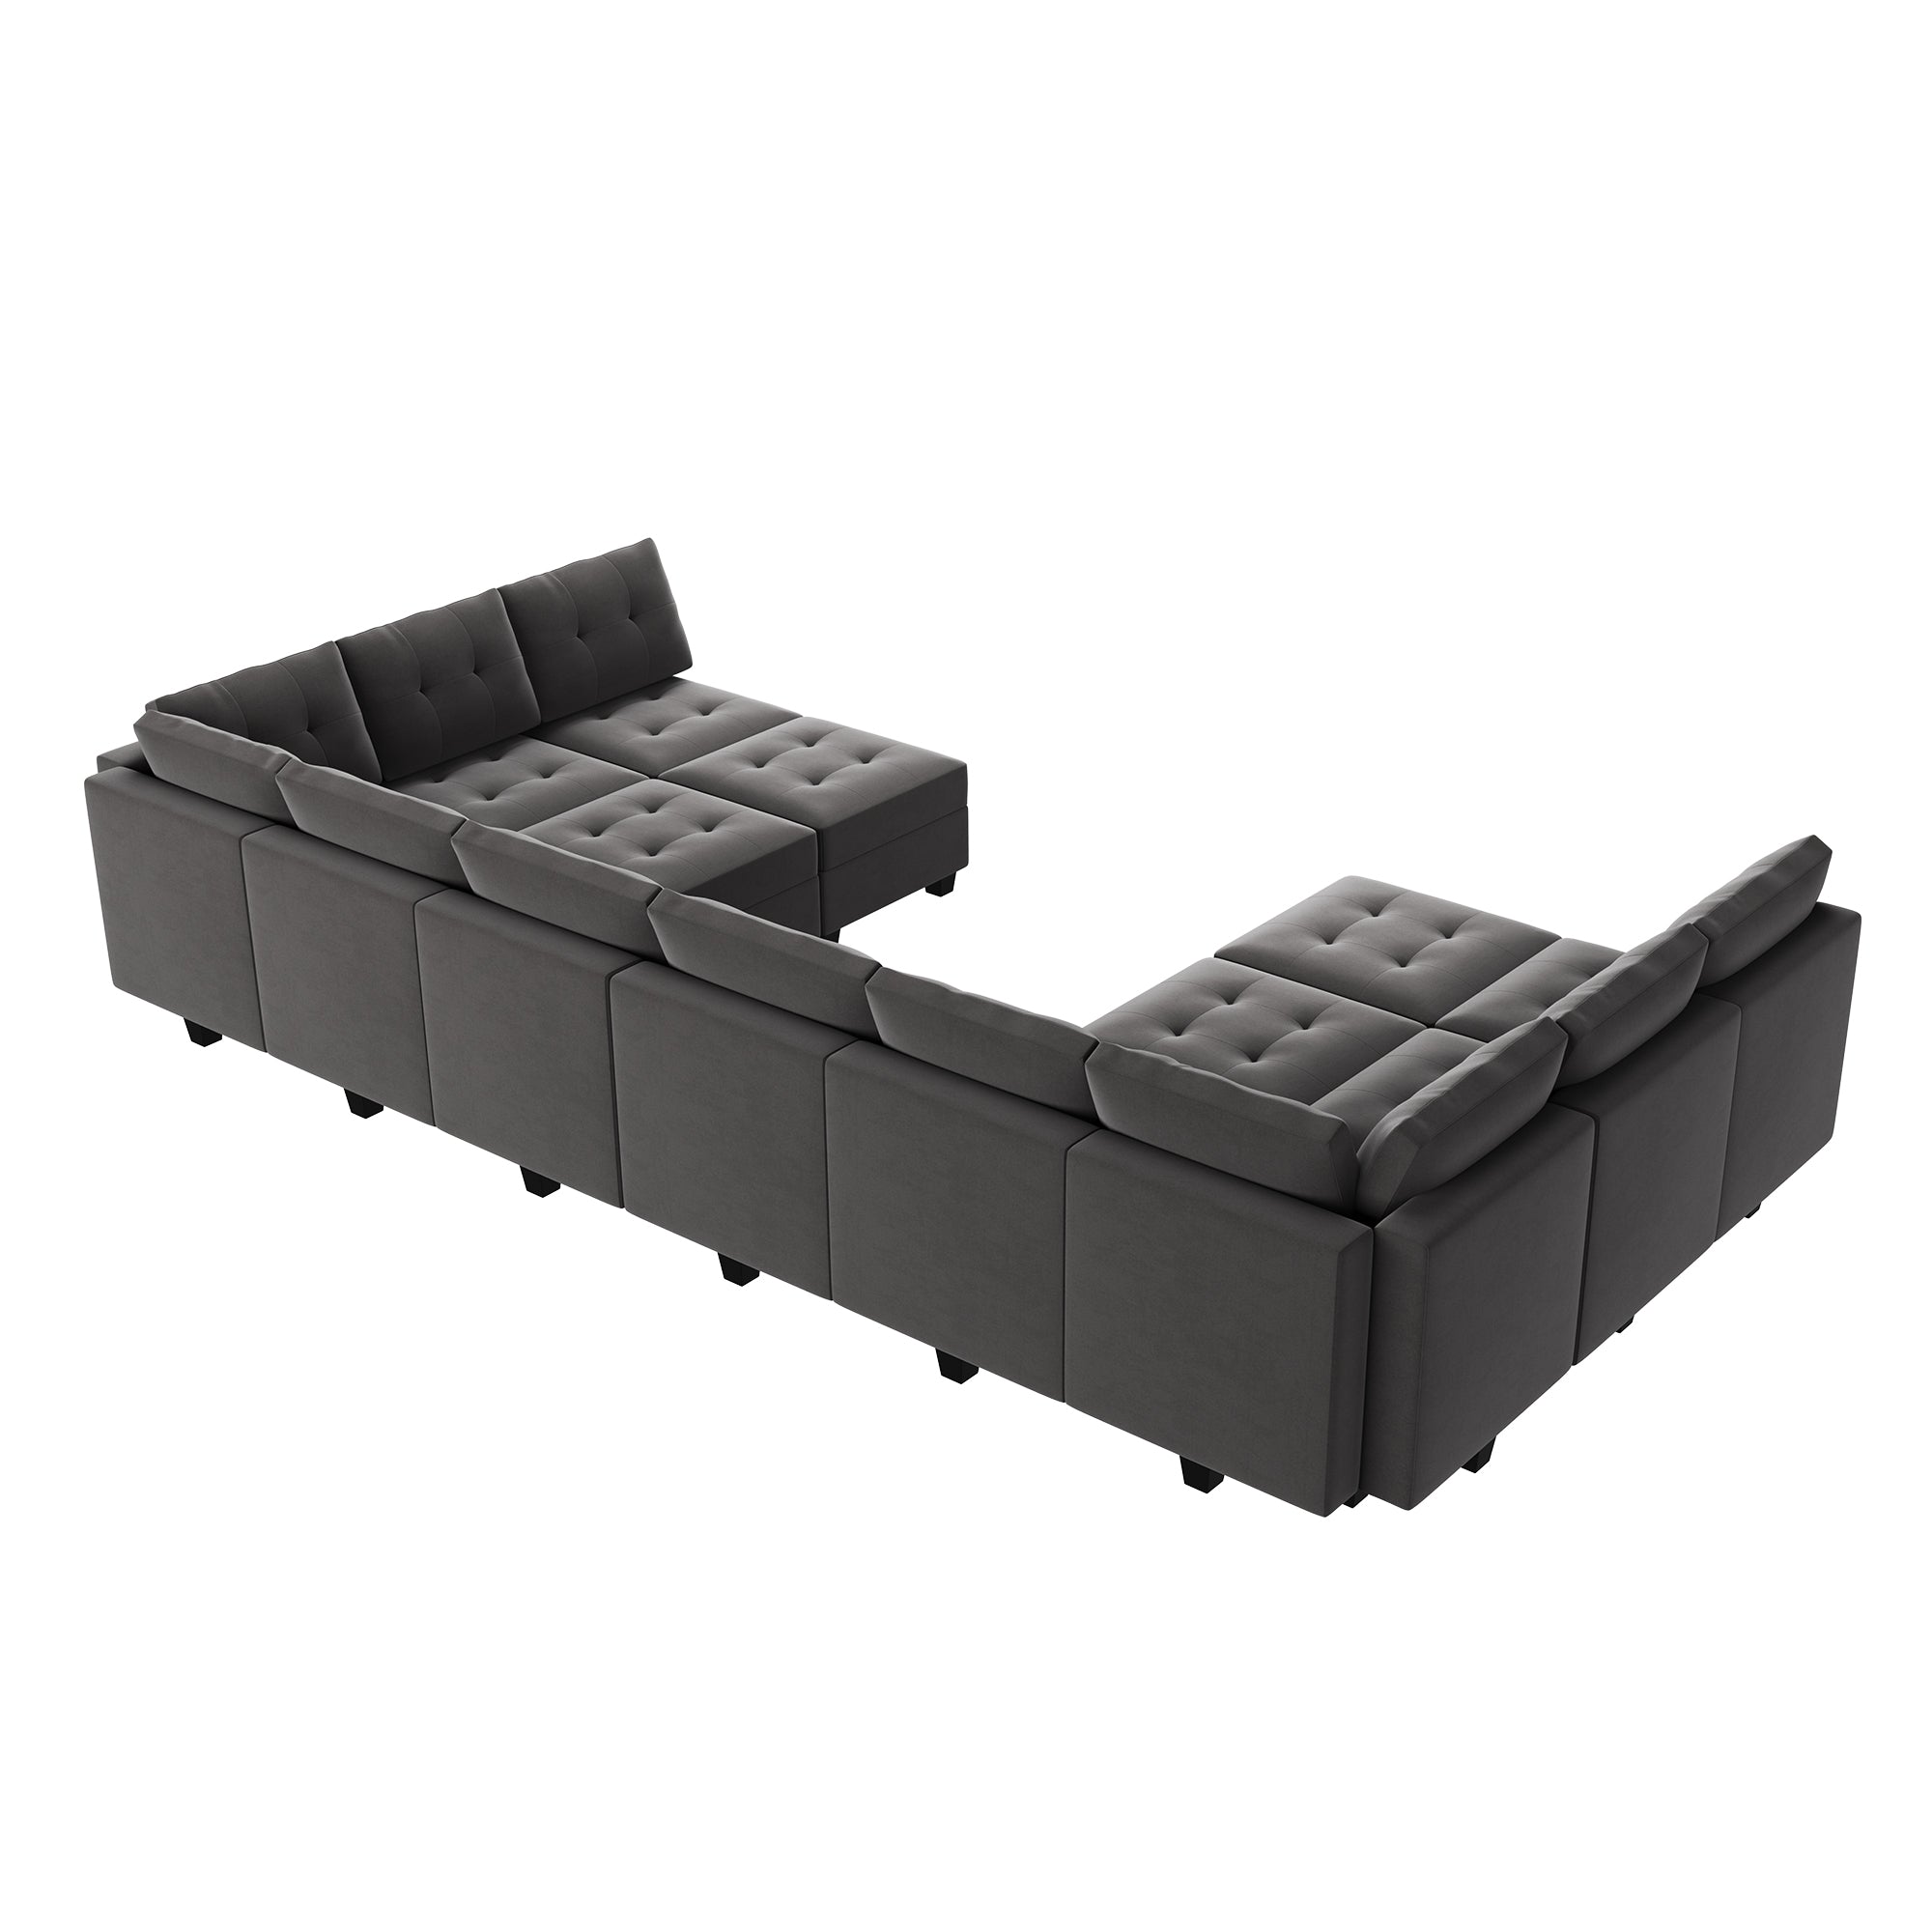 HONBAY 14-Piece Velvet Modular Sleeper Sectional With Storage Seat